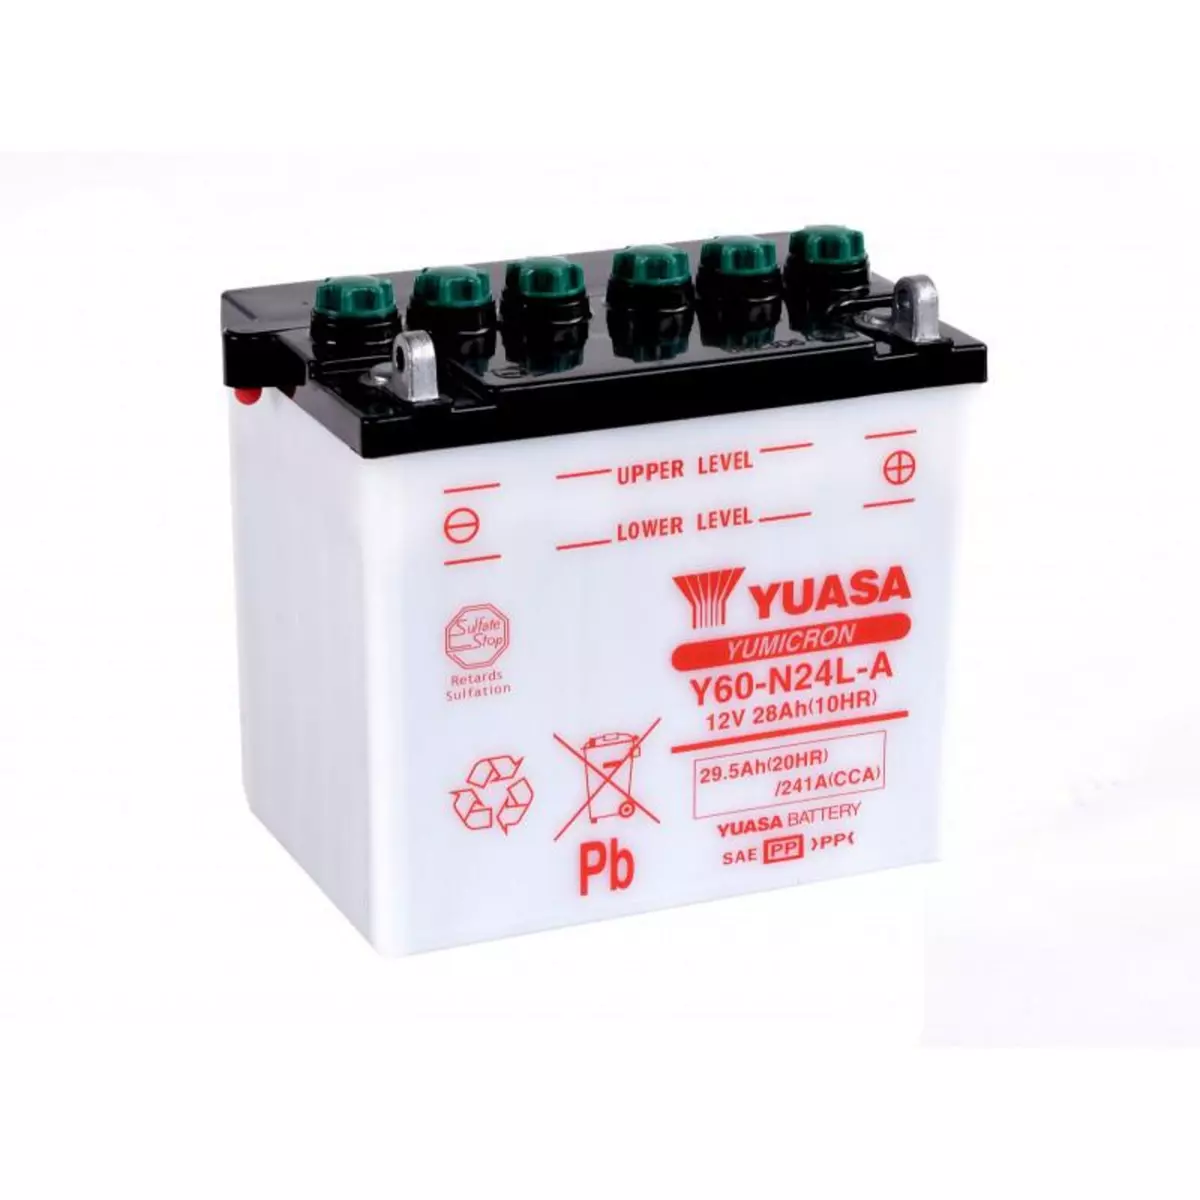 YUASA Batterie moto YUASA Y60-N24L-A 12V 29.5AH 241A